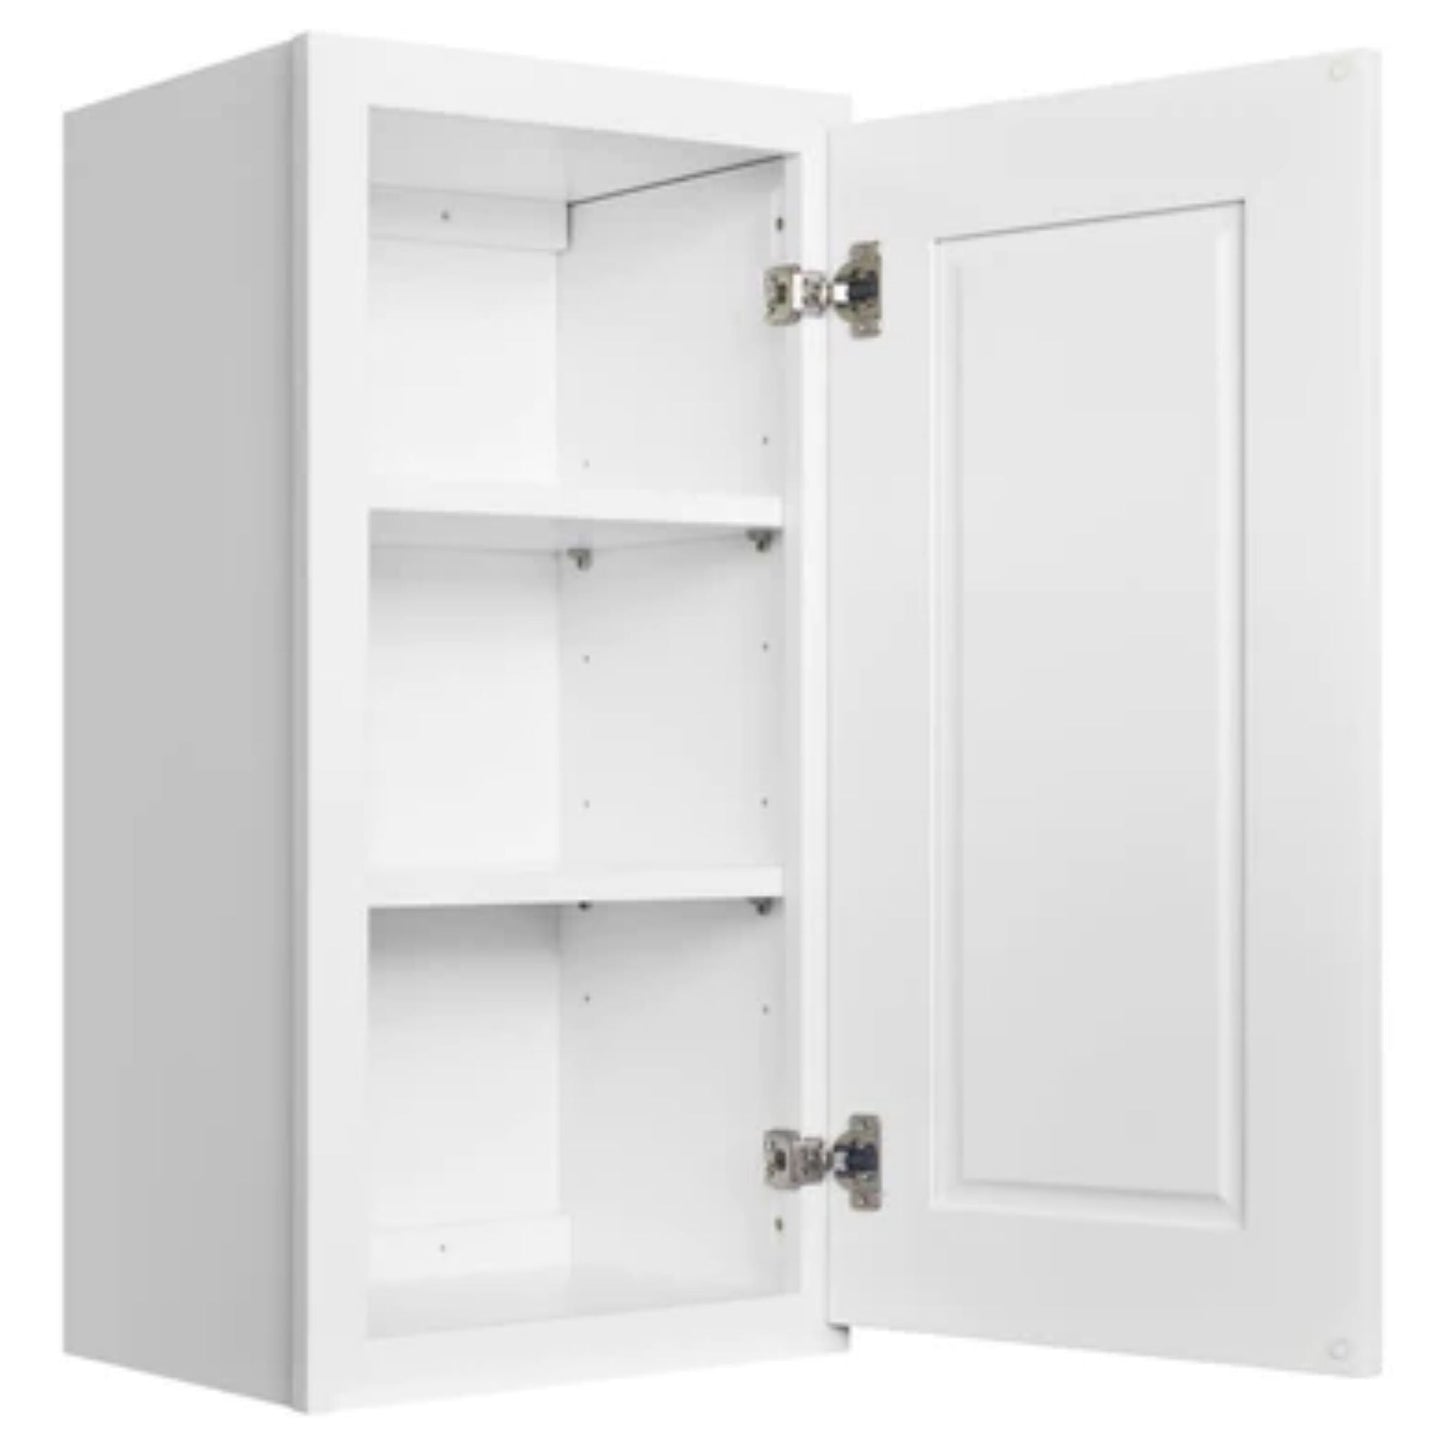 LessCare 42" x 34.5" x 21" Alpina White Vanity Sink Base Cabinet